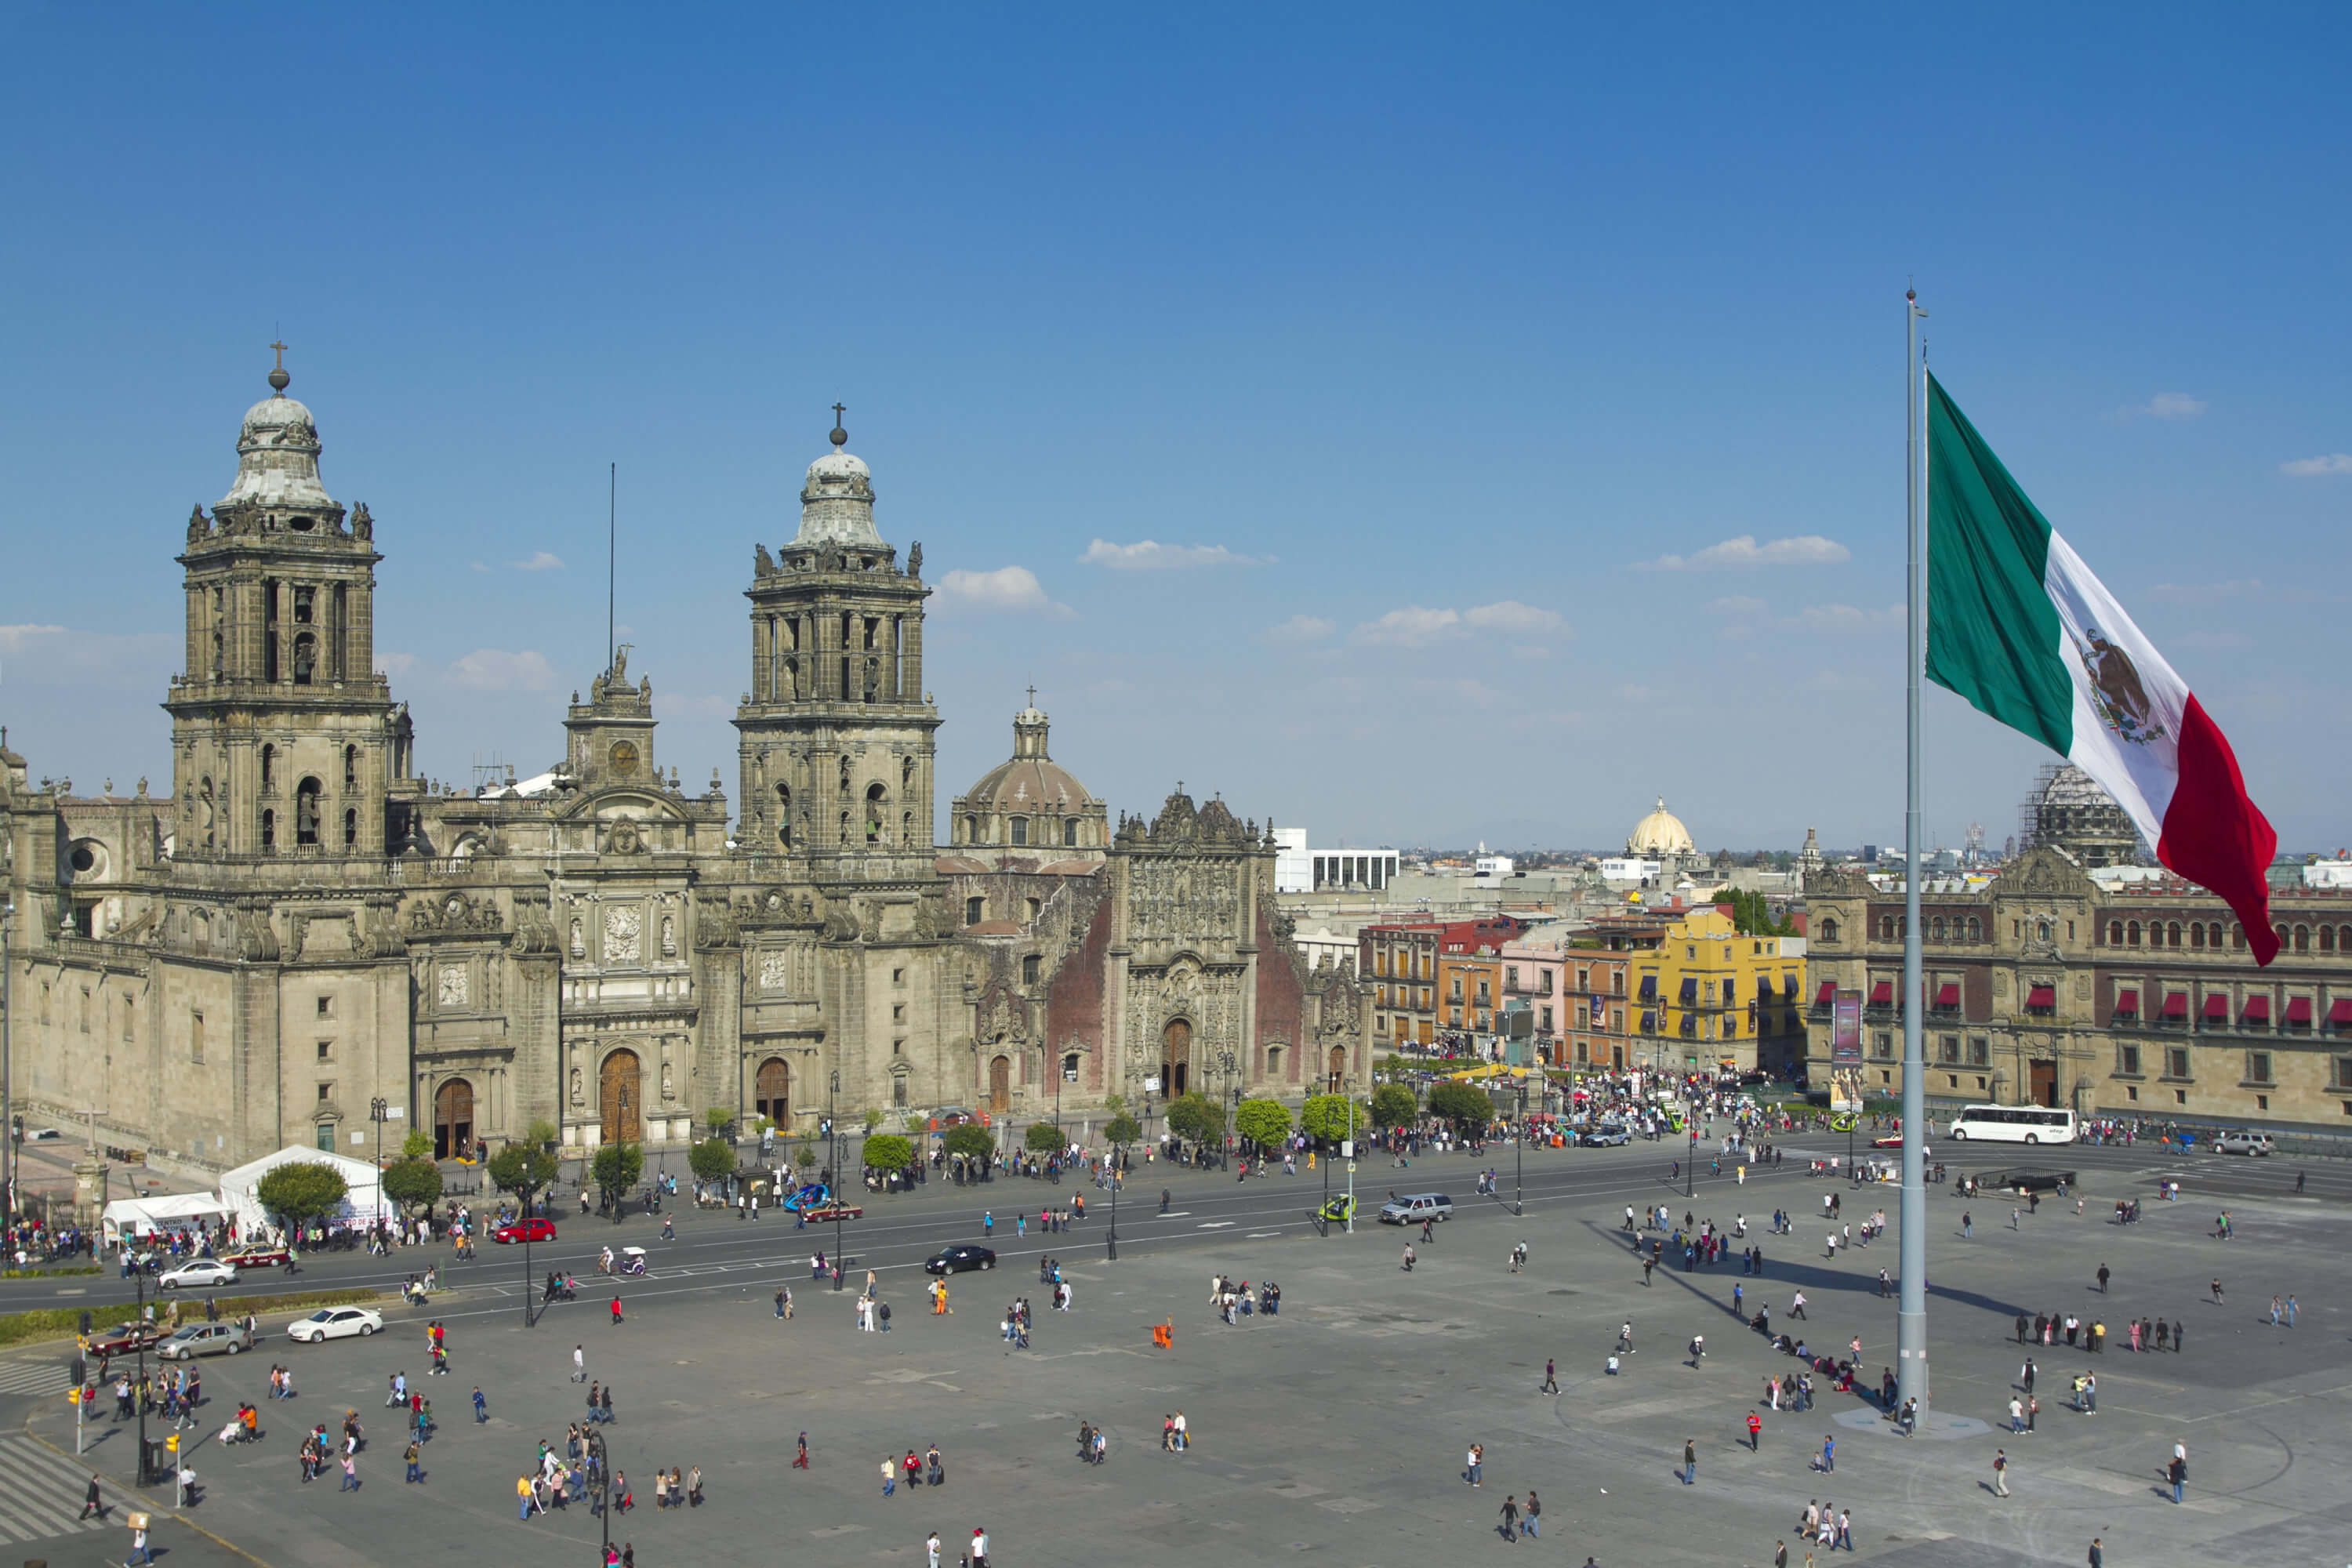 The Zocalo in Mexico City